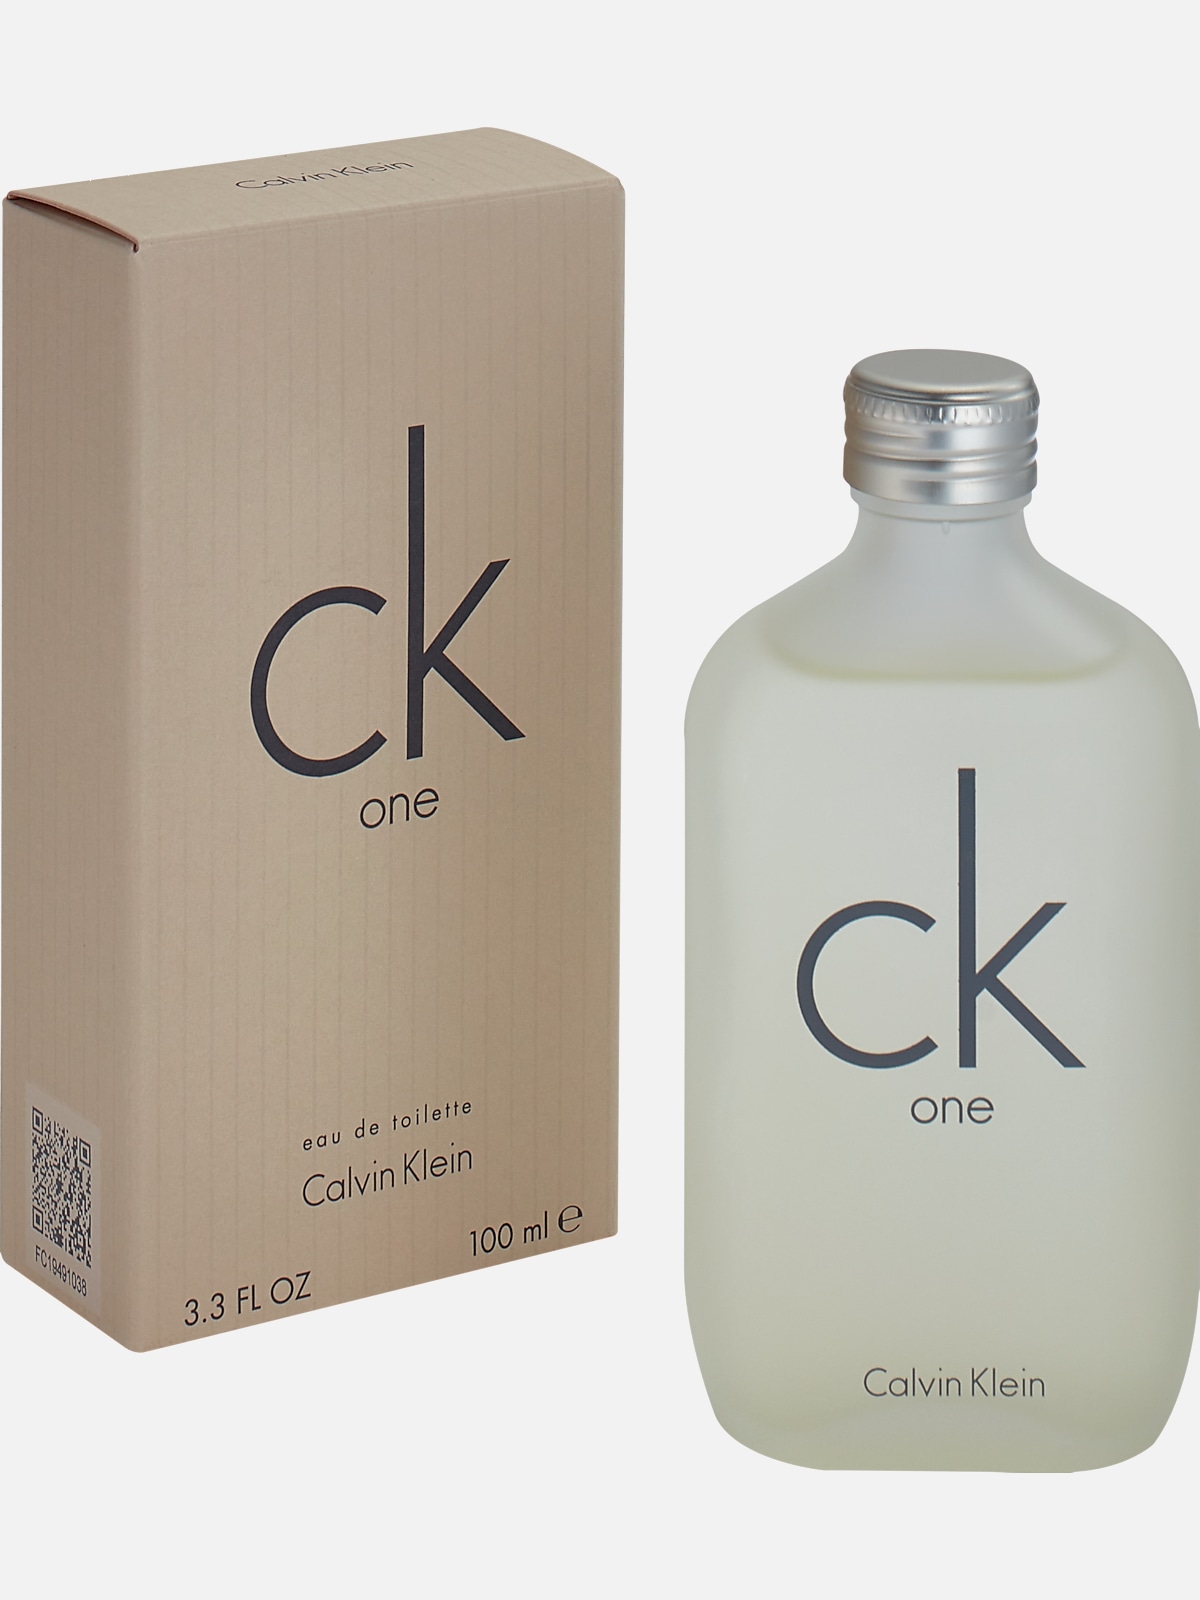 Calvin Klein One Eau Wearhouse Toilette3.4 oz. Gifts| | de Men\'s